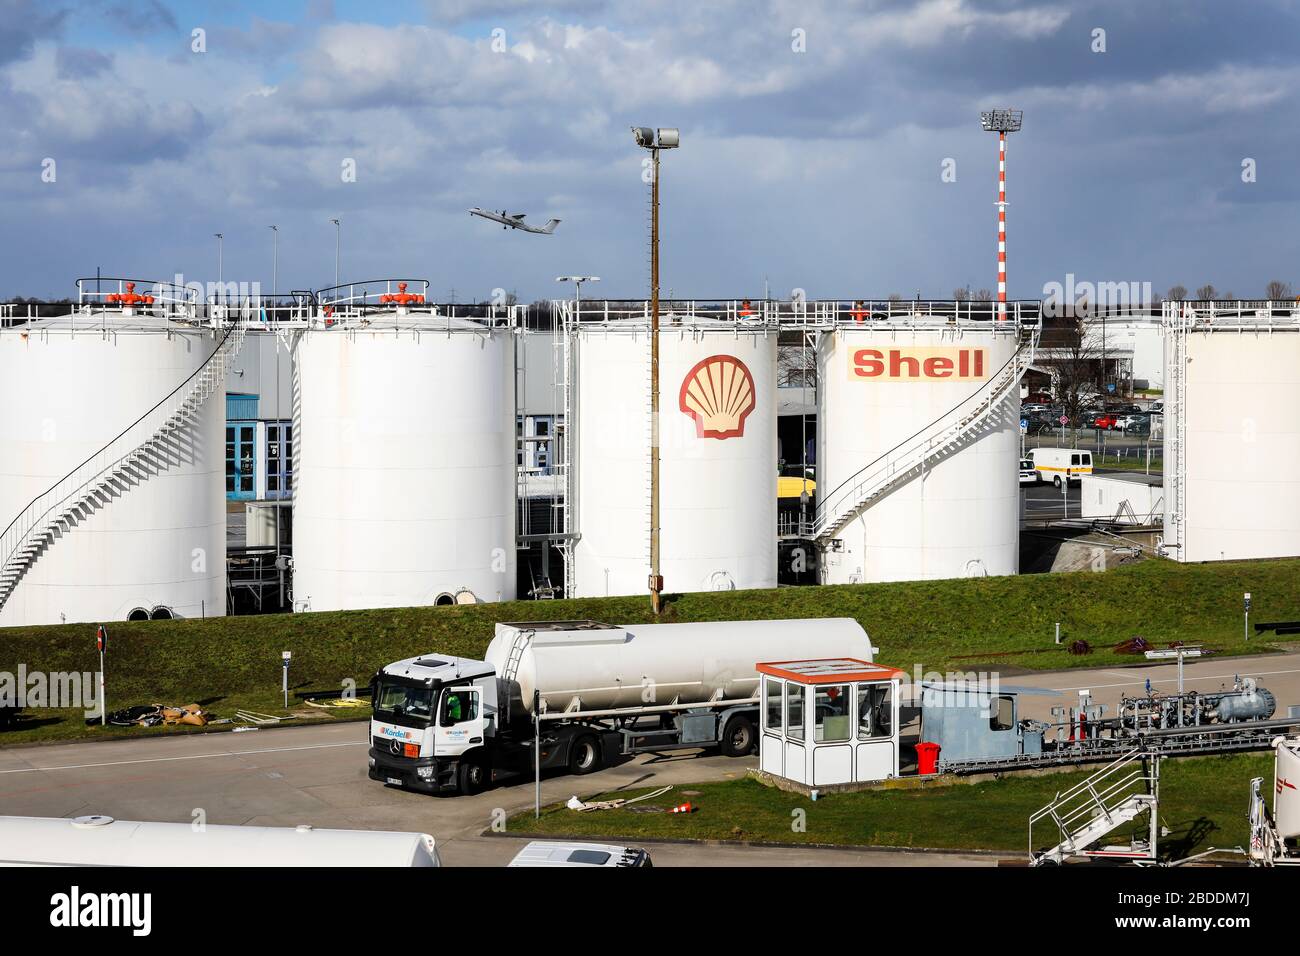 11.02.2020, Duesseldorf, North Rhine-Westphalia, Germany - Shell, aircraft fuel storage tanks at Duesseldorf International Airport, D-ABGQ. 00X200211D Stock Photo